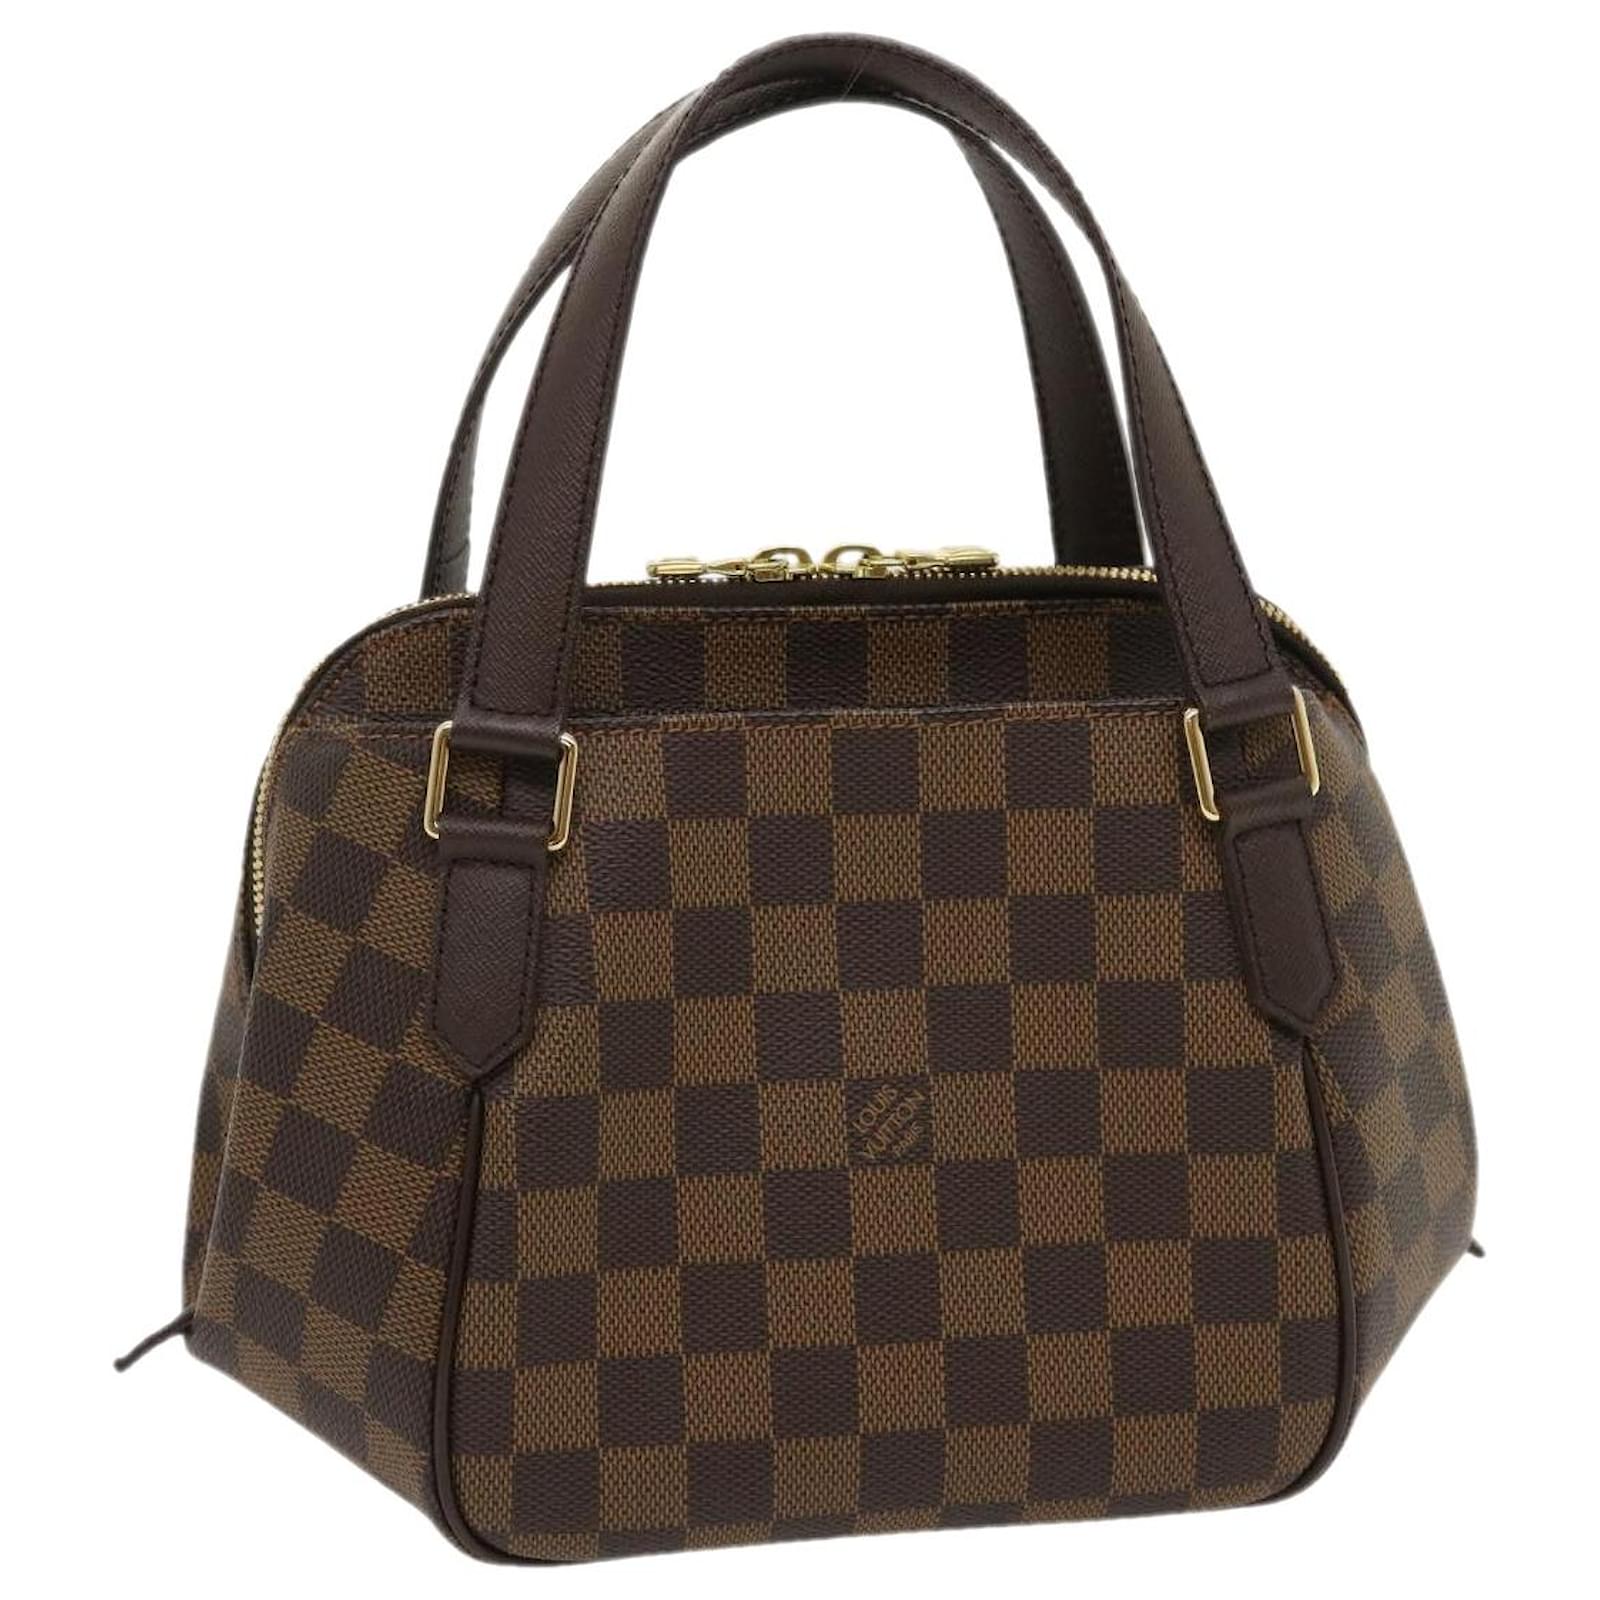 LOUIS VUITTON Damier Ebene Brown Leather Saleya PM Hand Bag - Excellent &  Auth